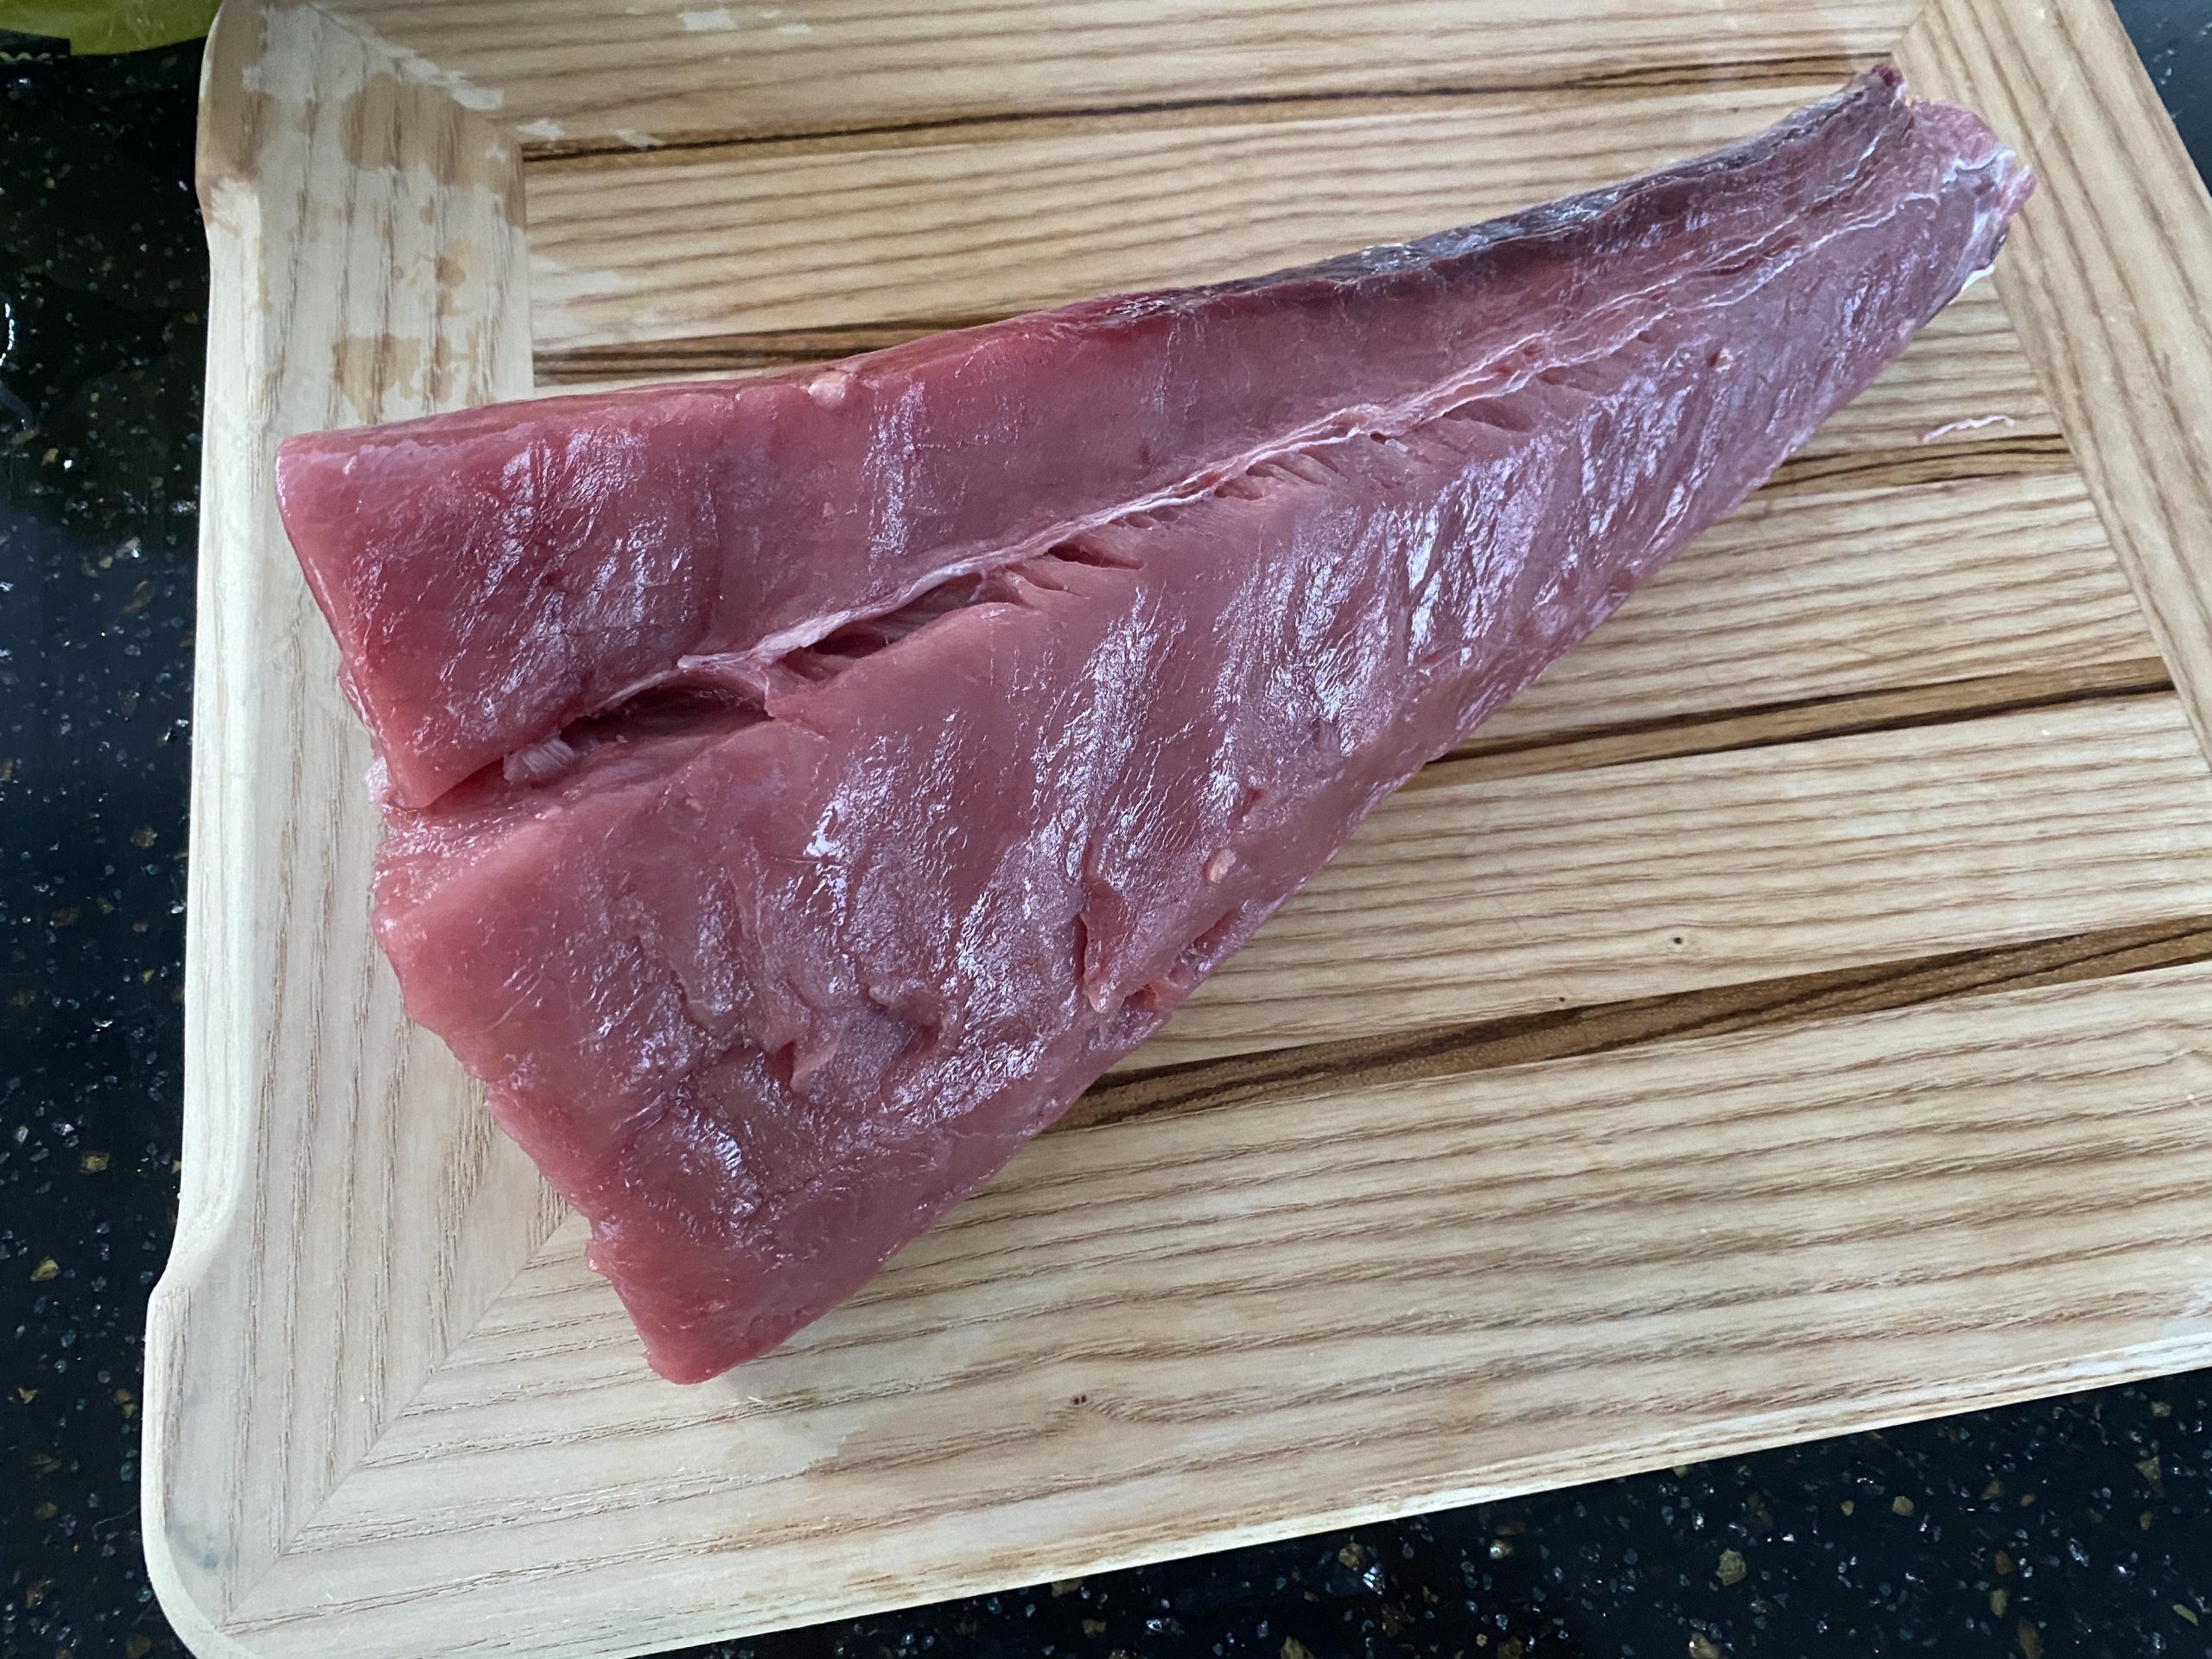 Tuna Steaks